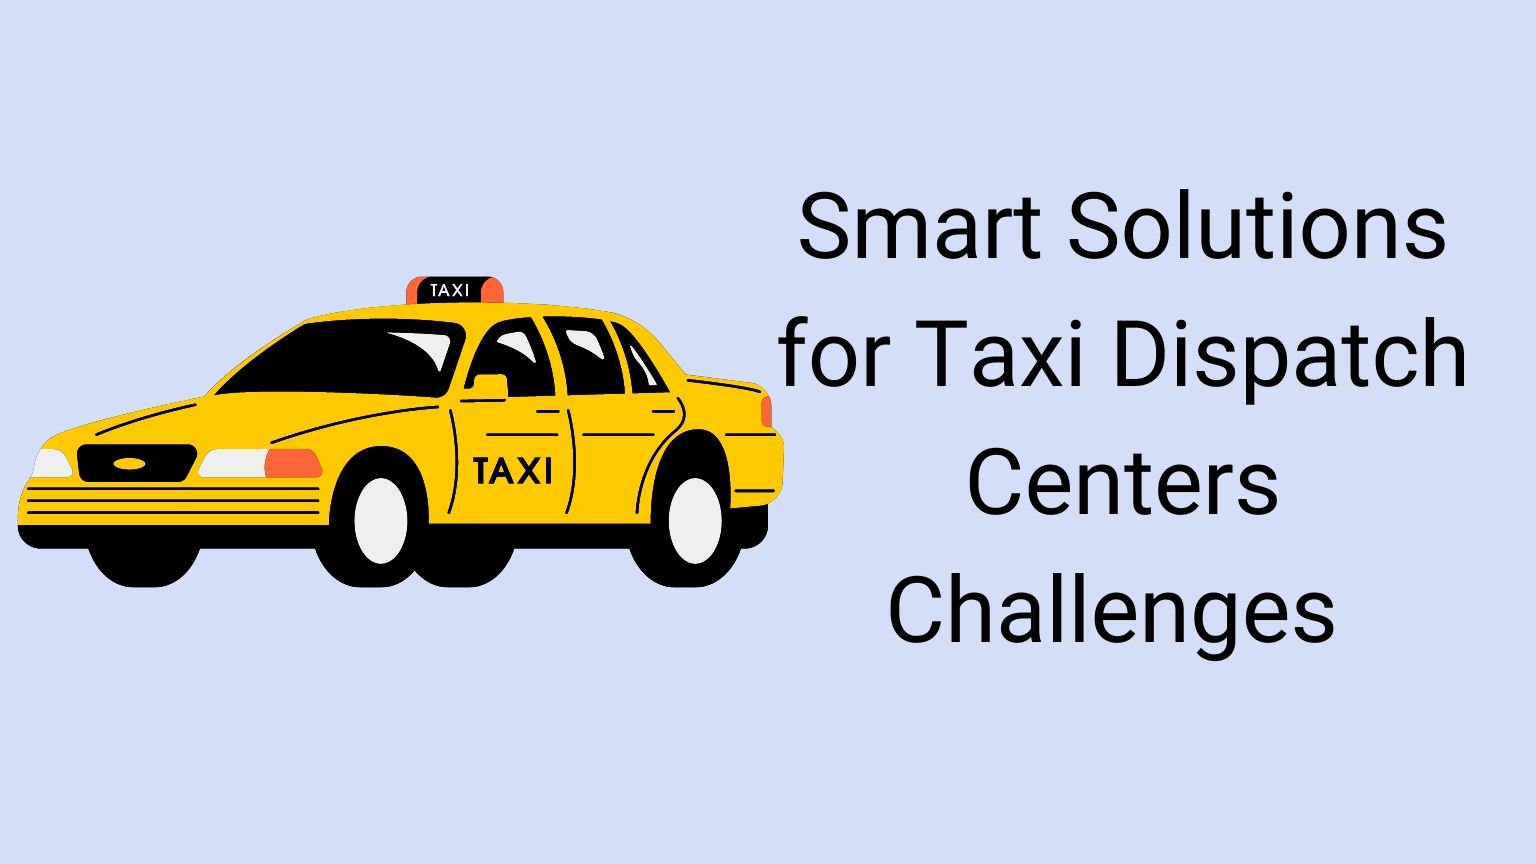 Taxi Dispatch Centers